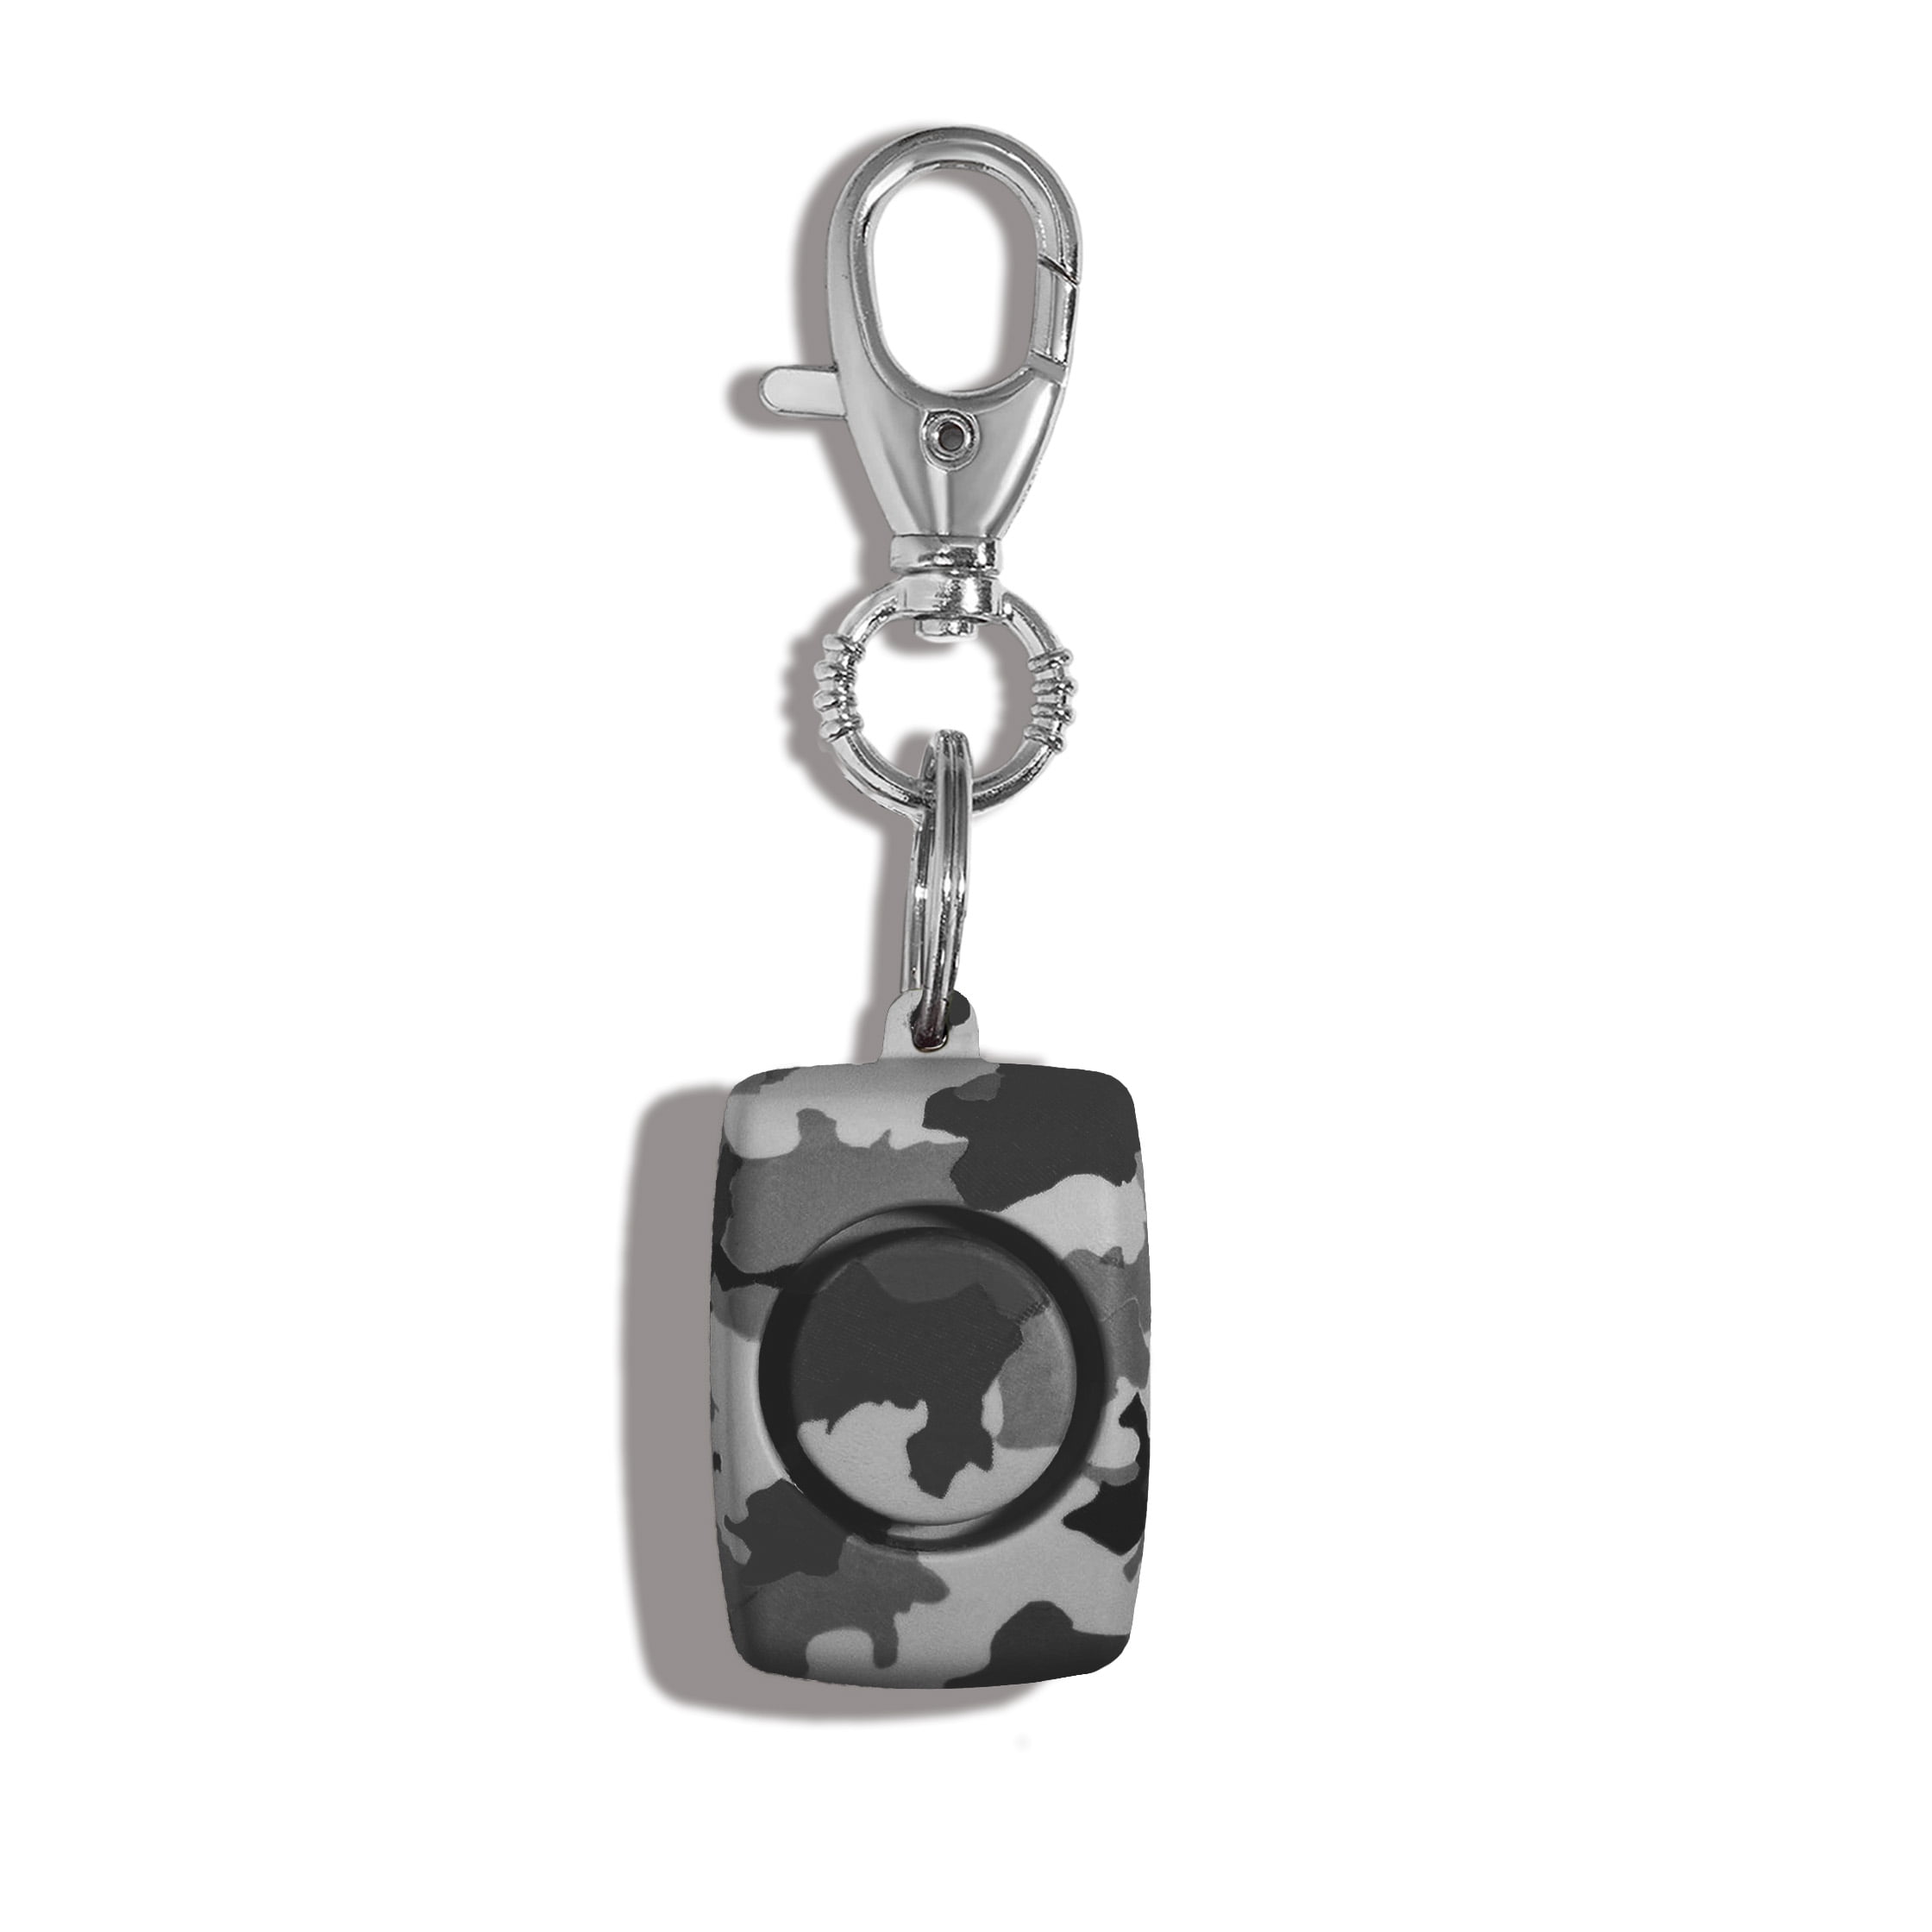 Bling Sting Personal Safety Alarm and Flashlight Grey Black Camo Key Ring